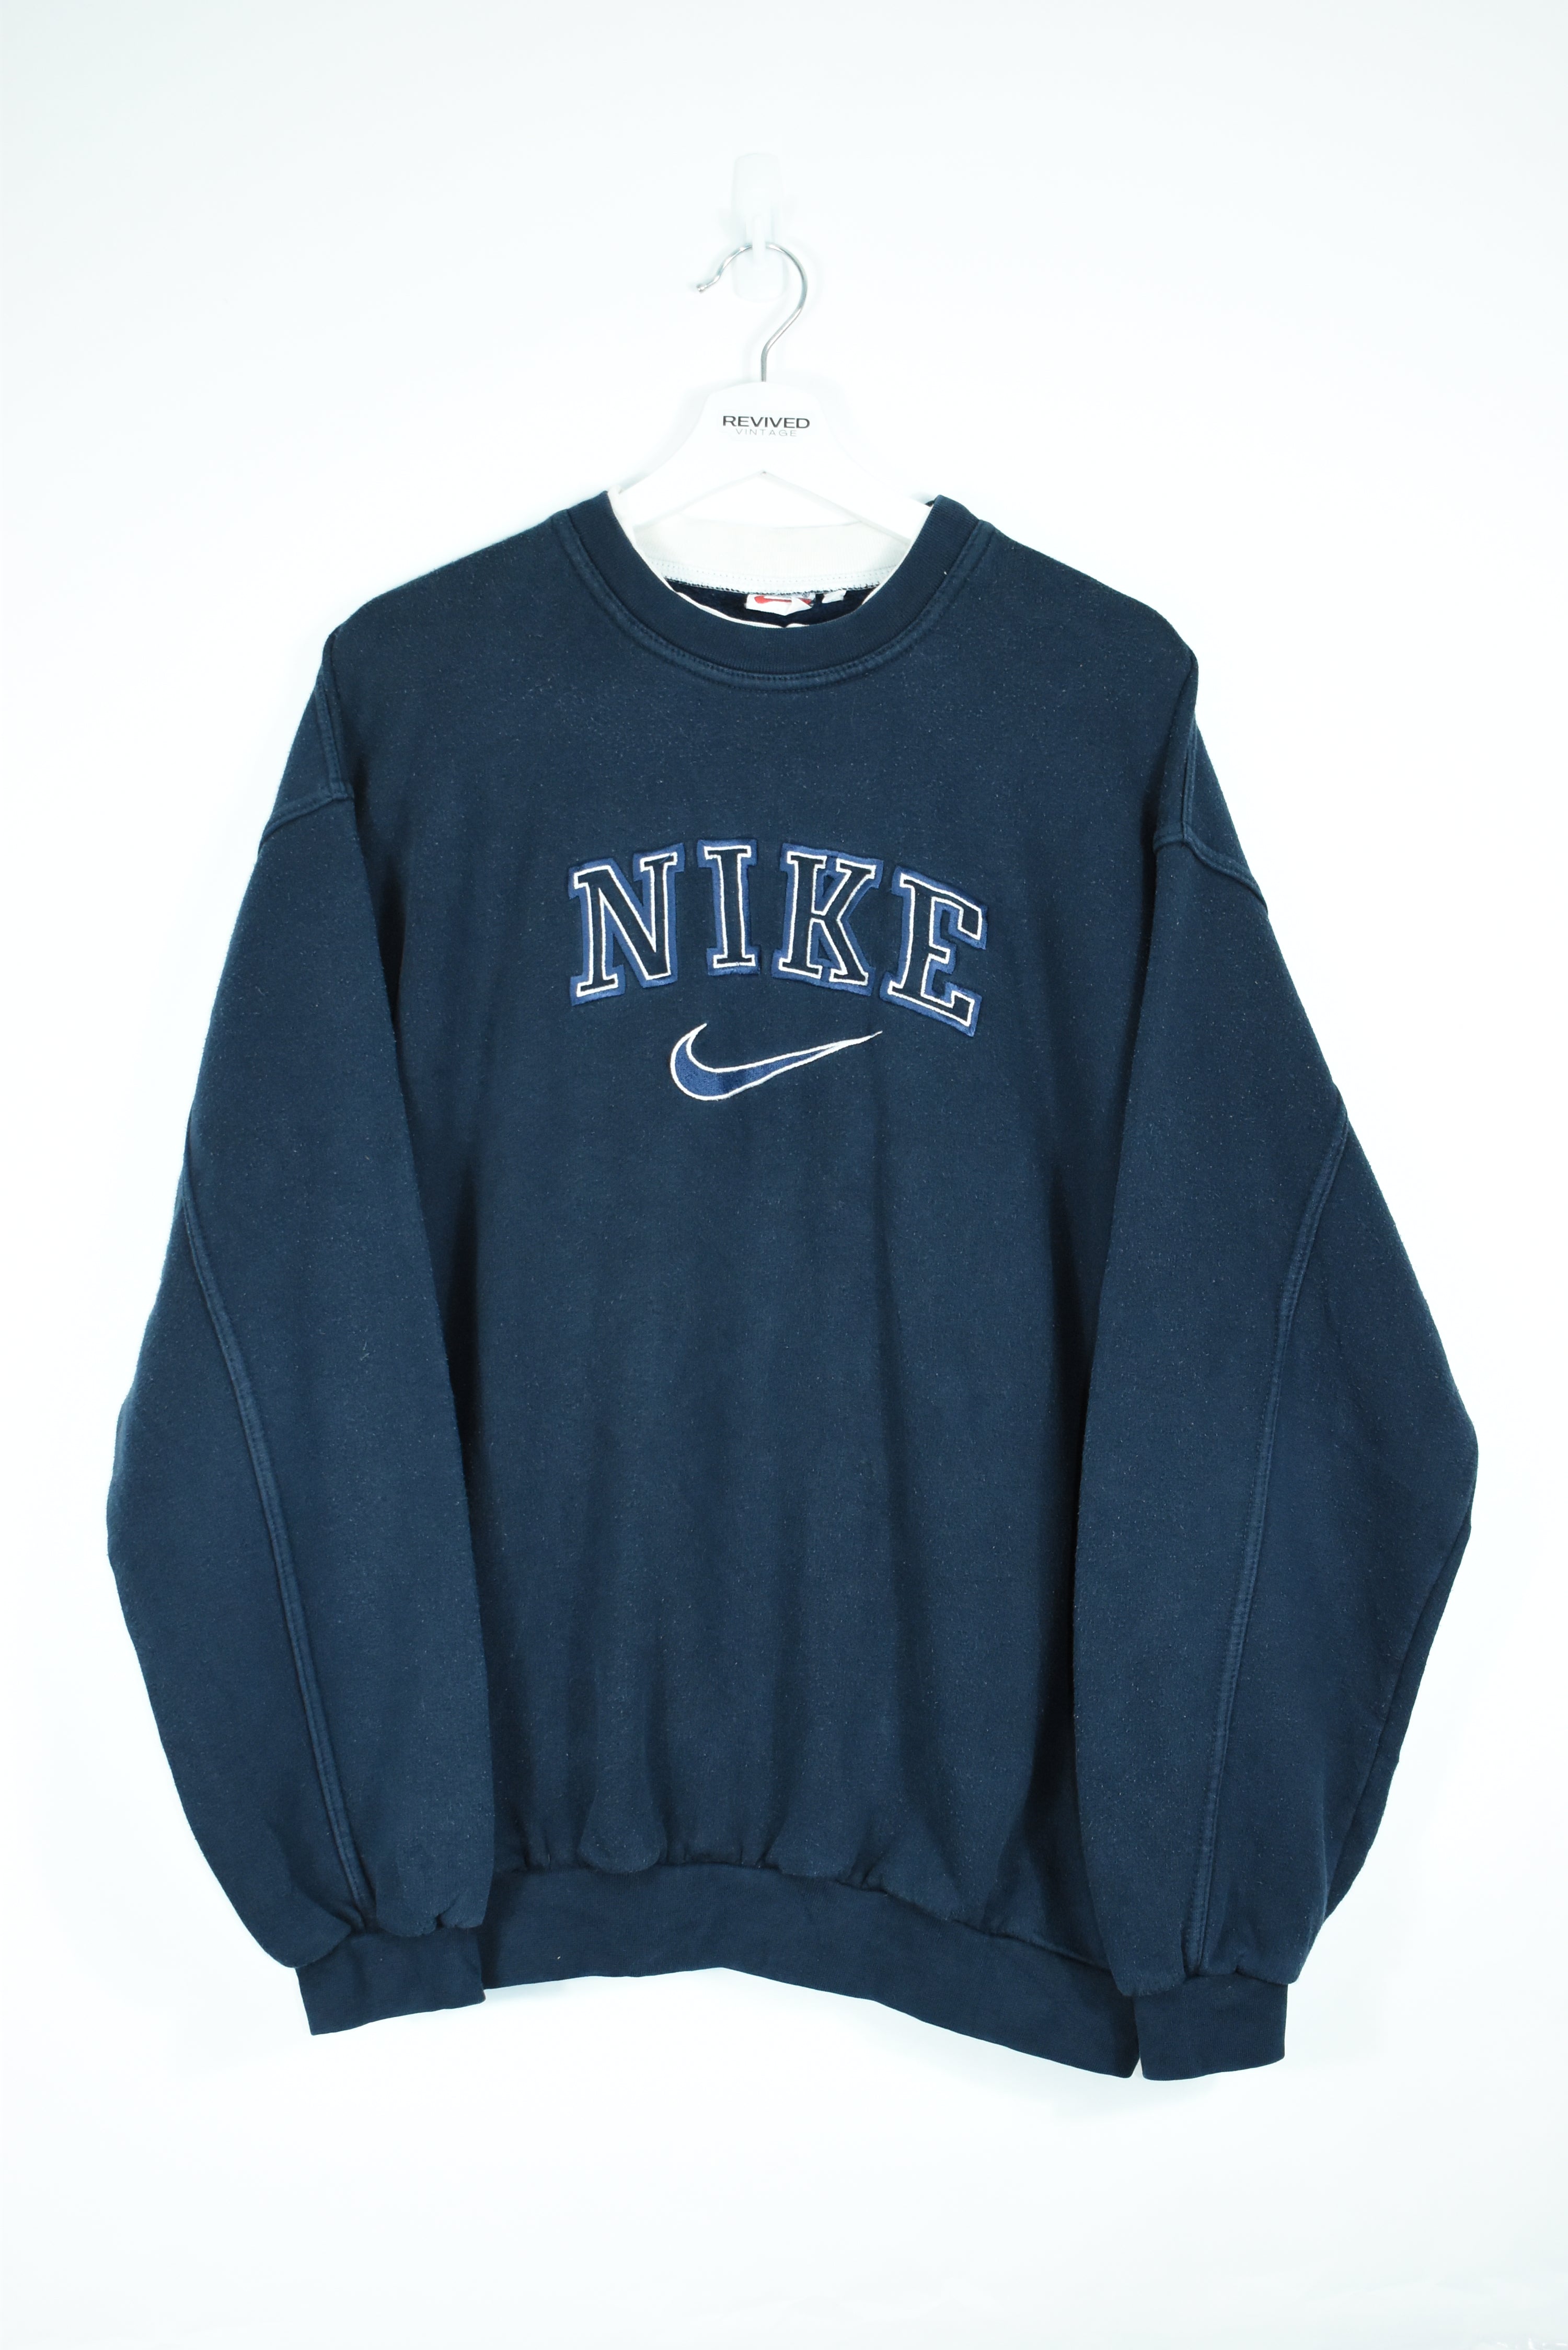 New Rare Nike Navy Bootleg Sweatshirt Large